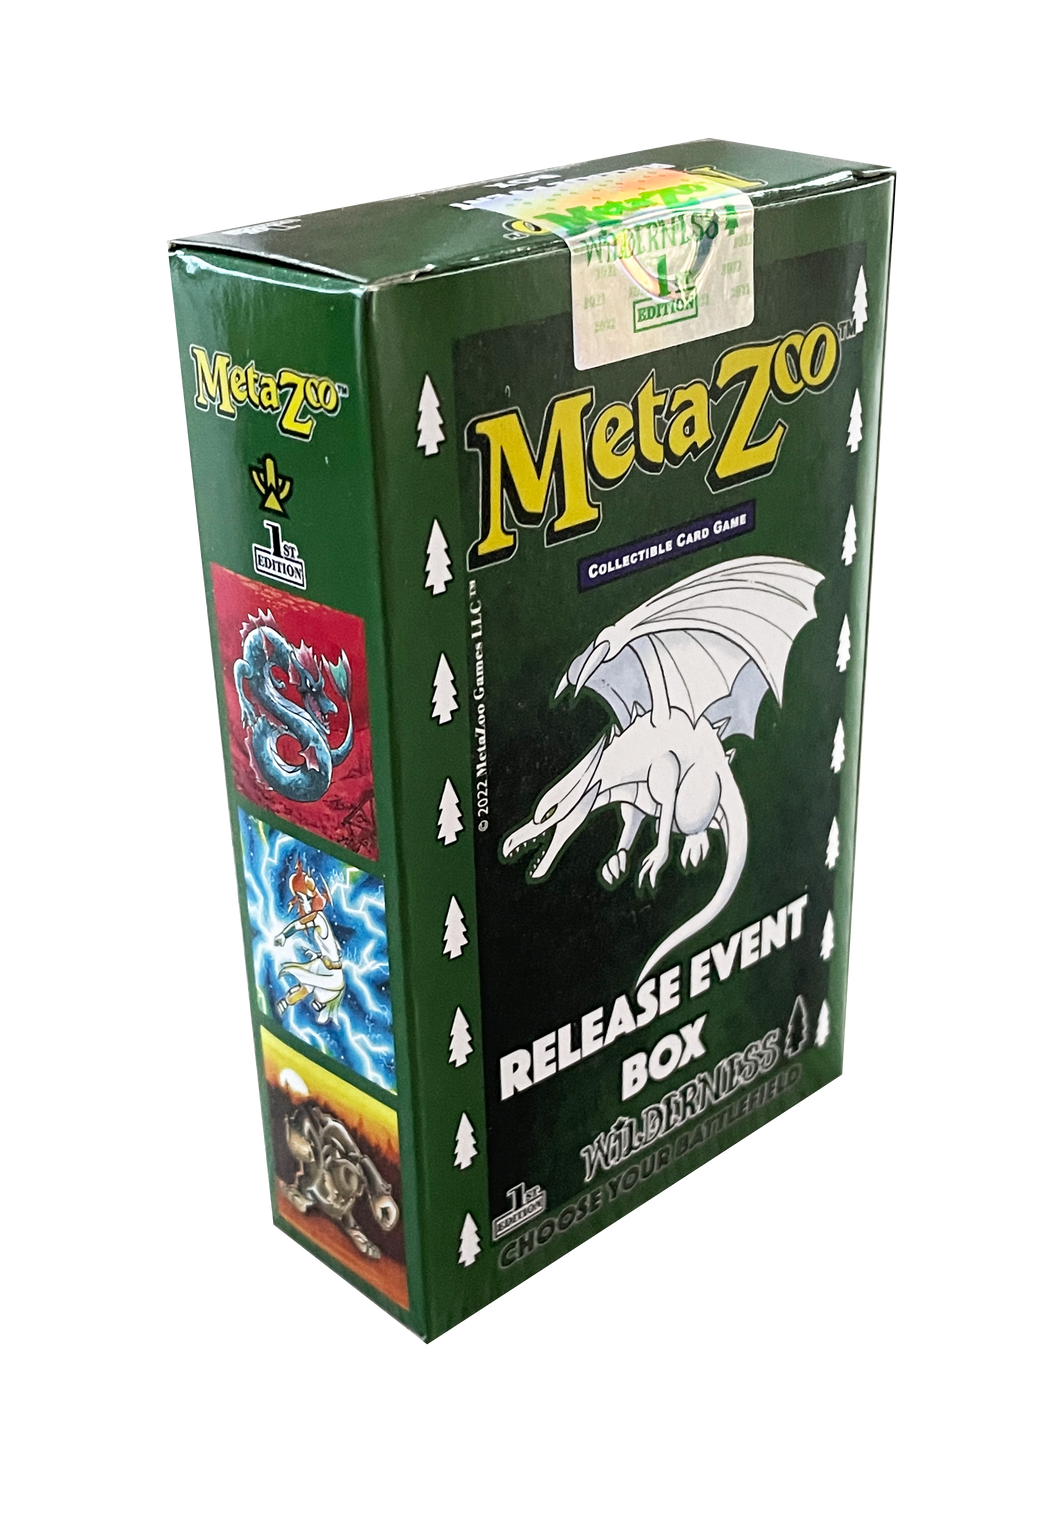 MetaZoo Wilderness Release Event Box